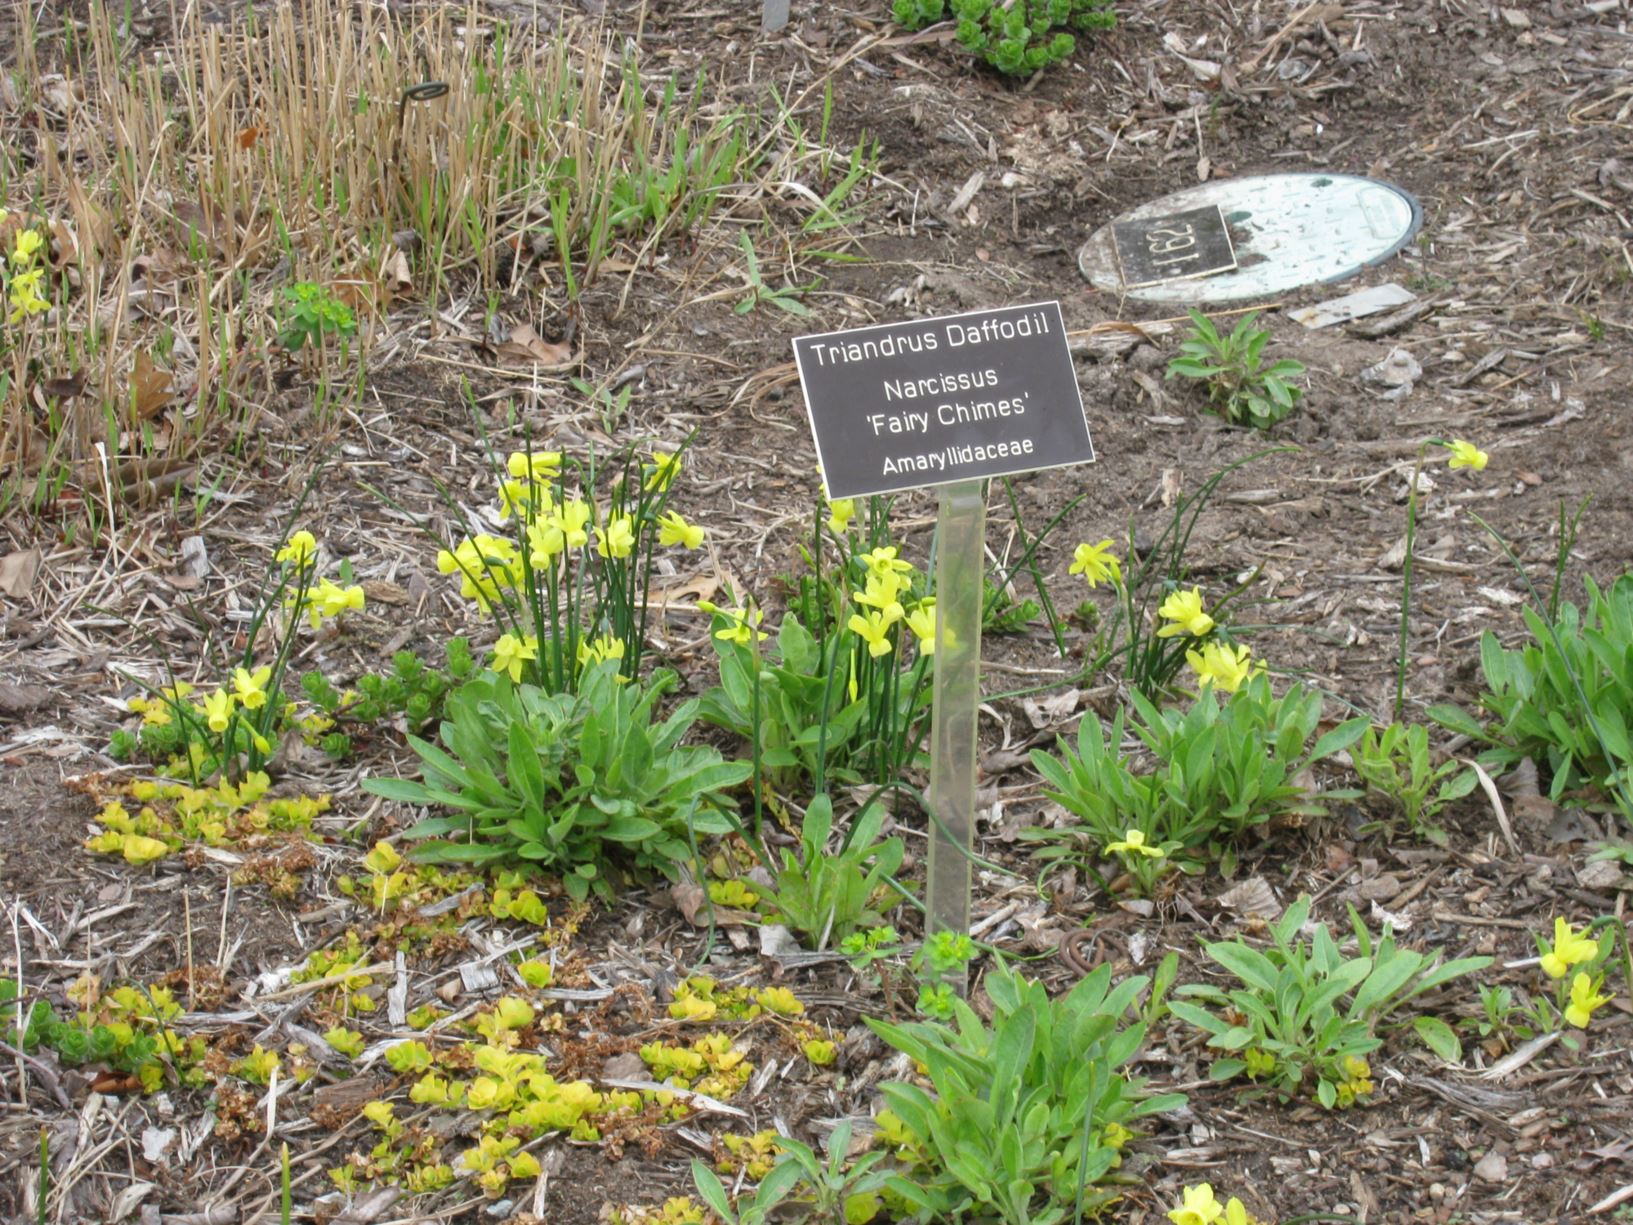 Narcissus 'Fairy Chimes' - triandrus daffodil